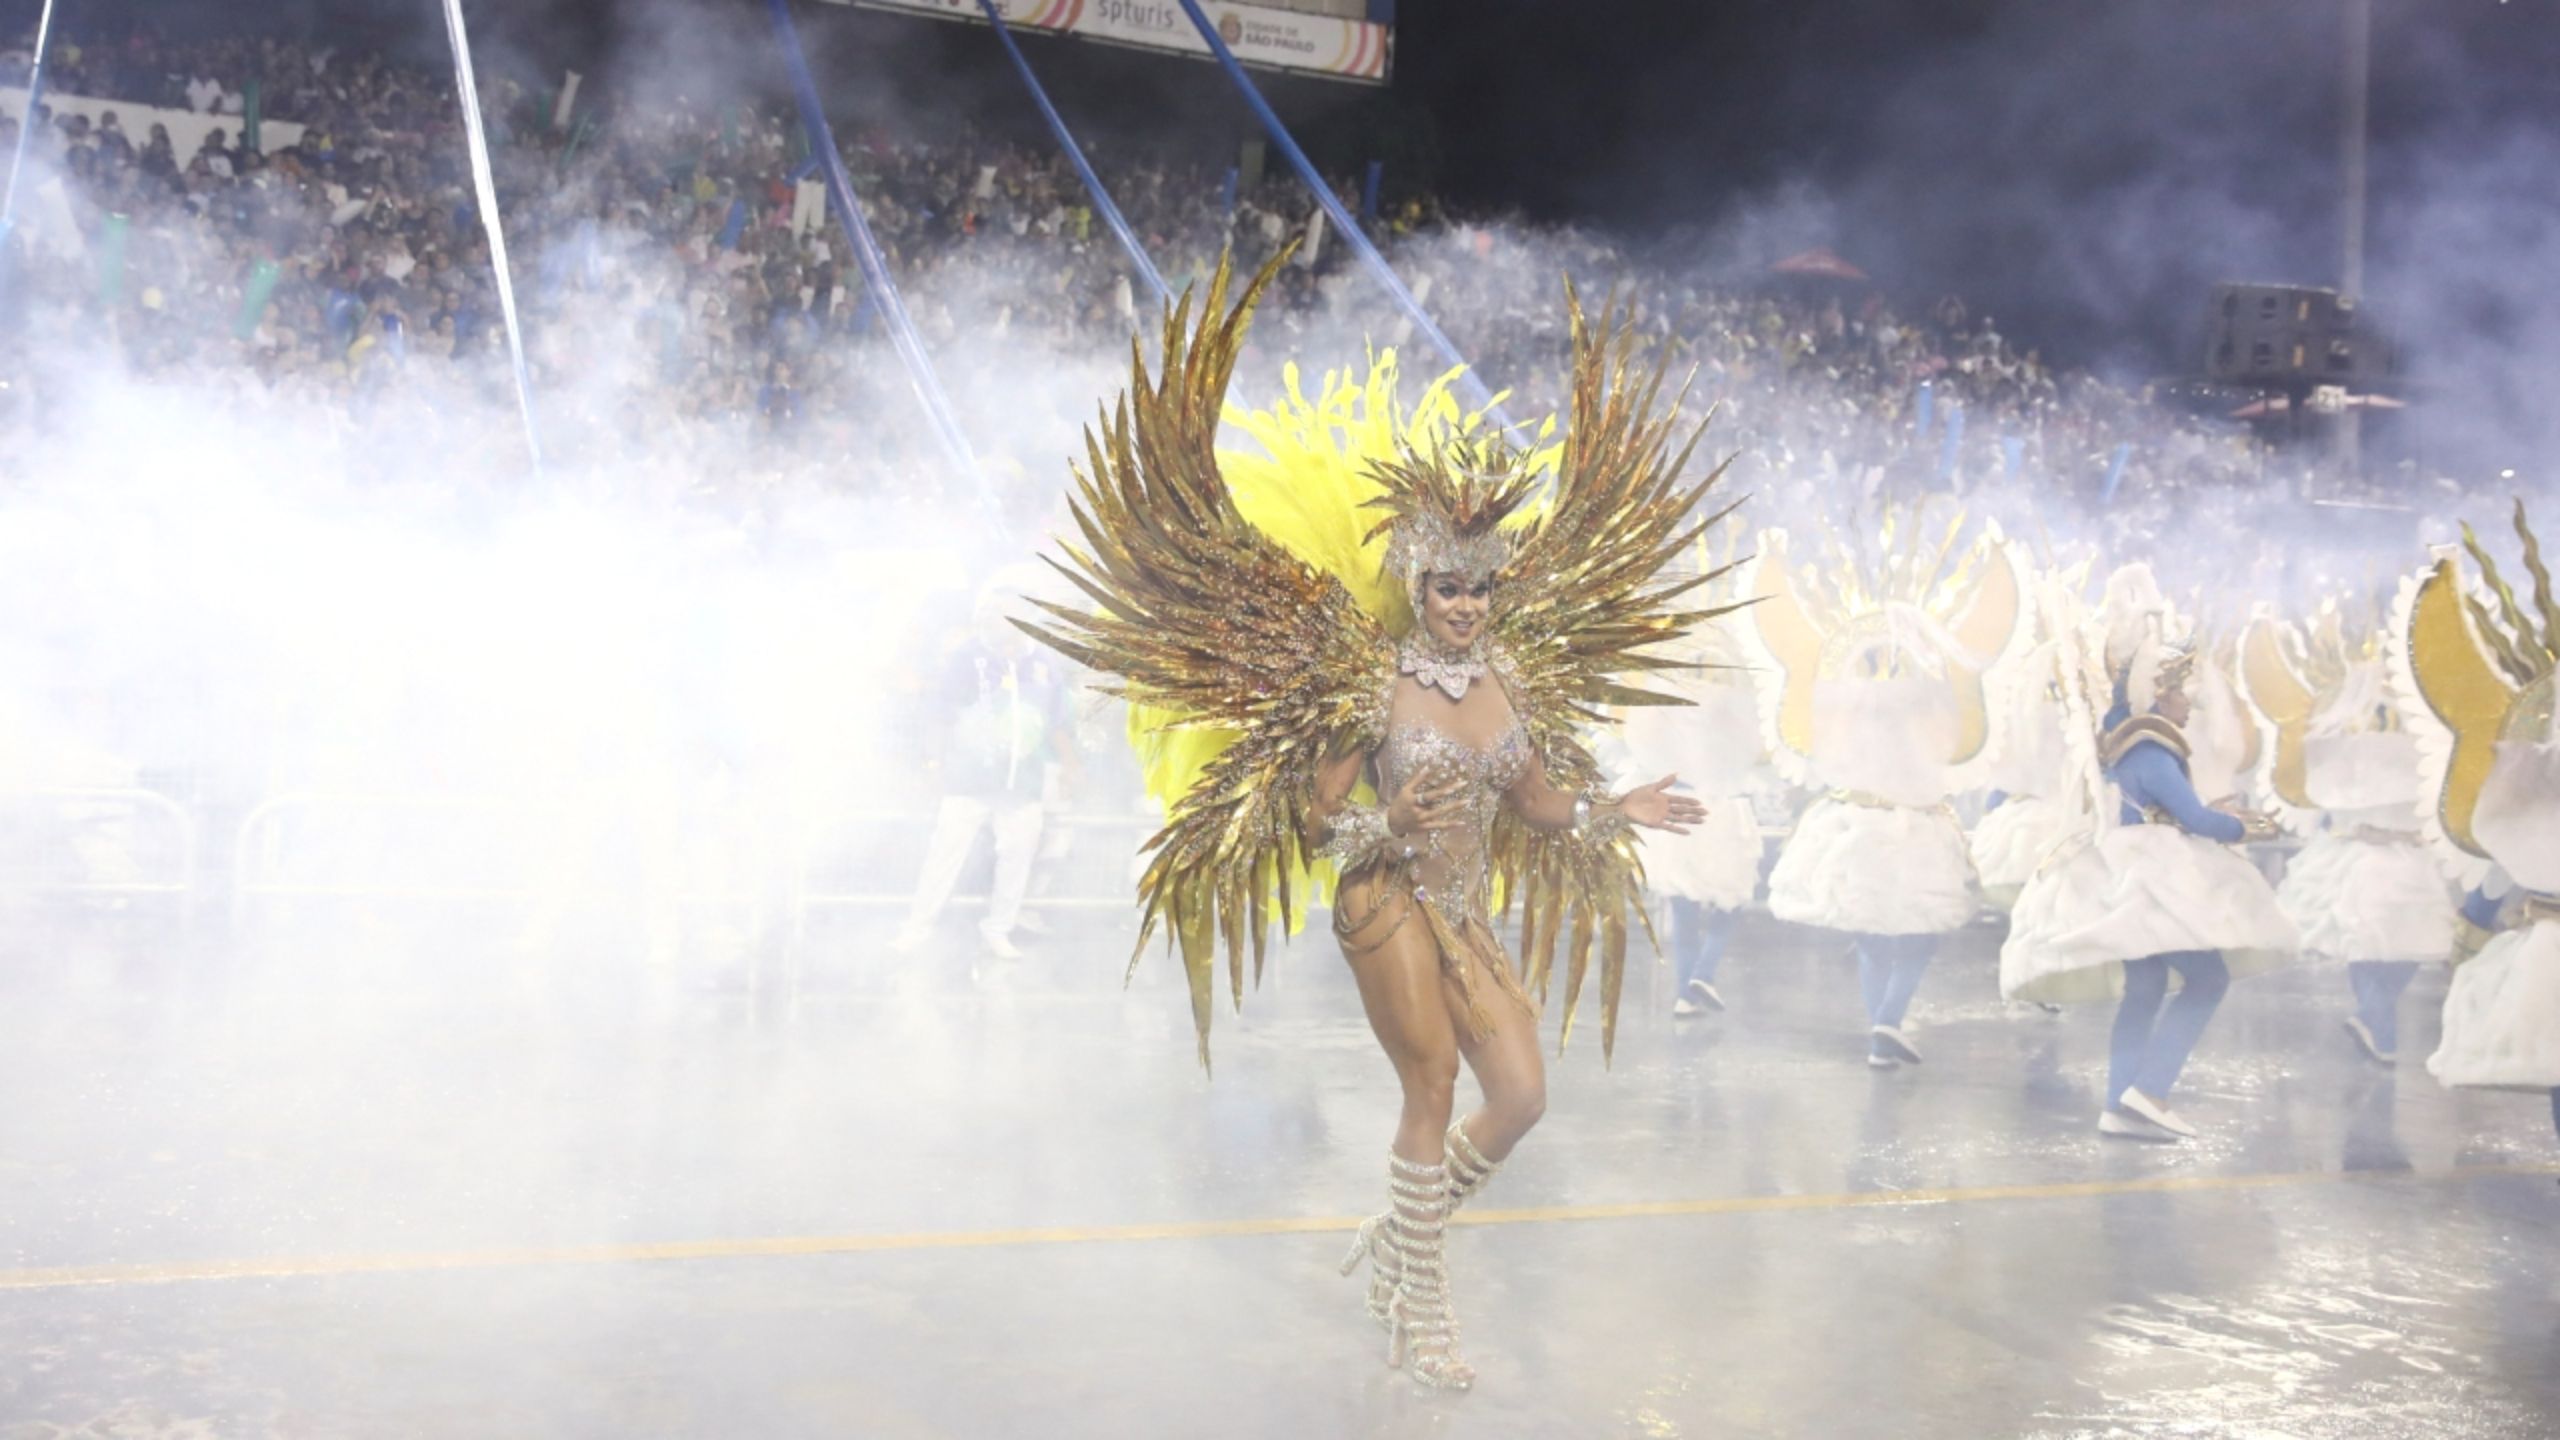 Brazil Carnival: બ્રાઝિલમાં રાજધાની રિયો ડી જાનેરો સહિત સમગ્ર દેશના કાર્નિવલ શરૂ, થશે દમાકેદાર પર્ફોર્મન્સ